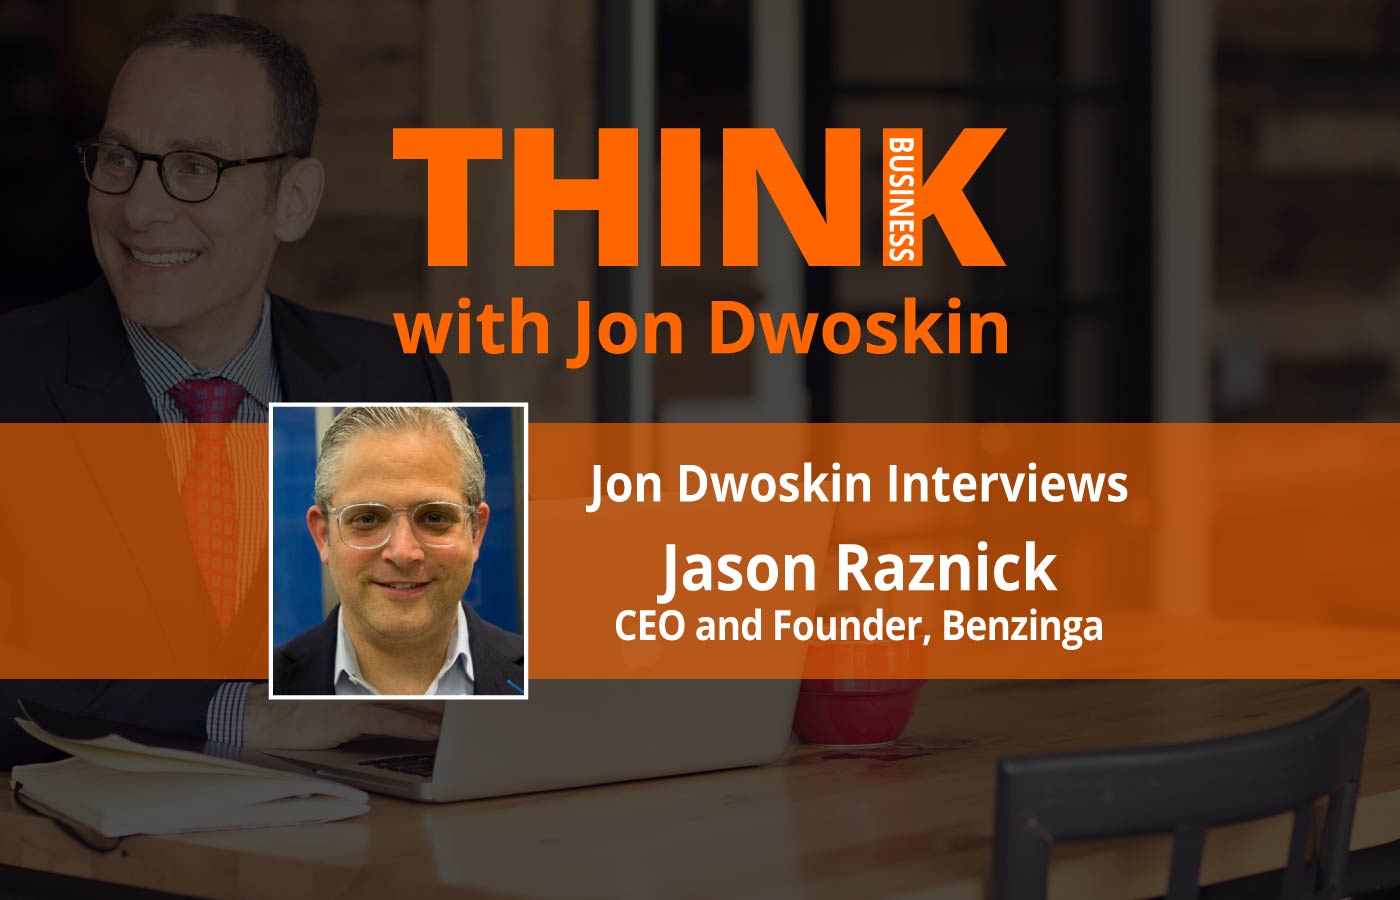 THINK Business: Jon Dwoskin Interviews Jason Raznick, CEO and Founder of Benzinga